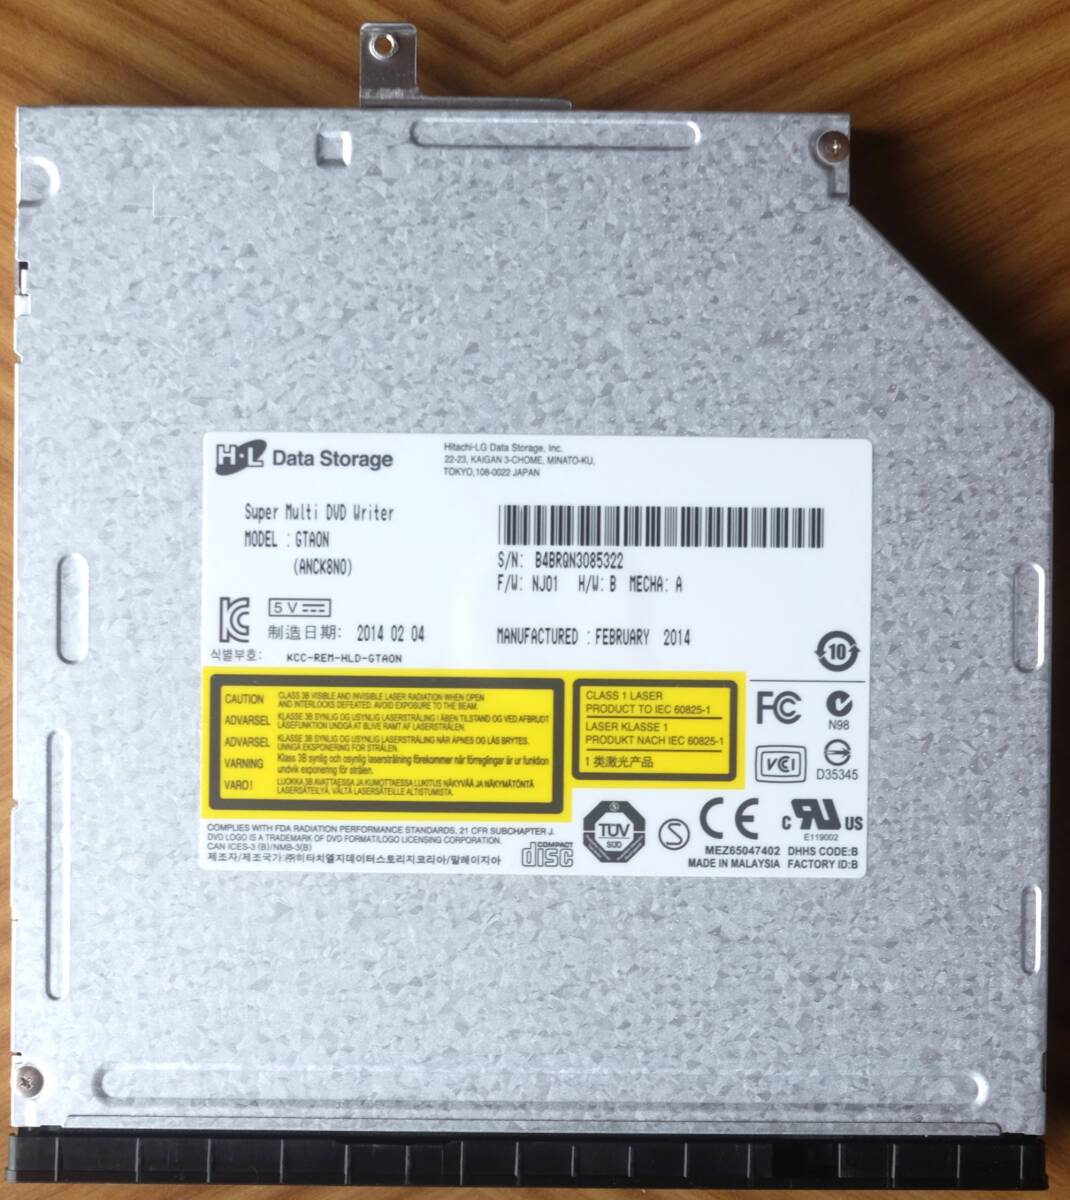 DVDスーパーマルチドライブ SATA 12.7mm ：H-L Data Storage GTA0Nの画像2